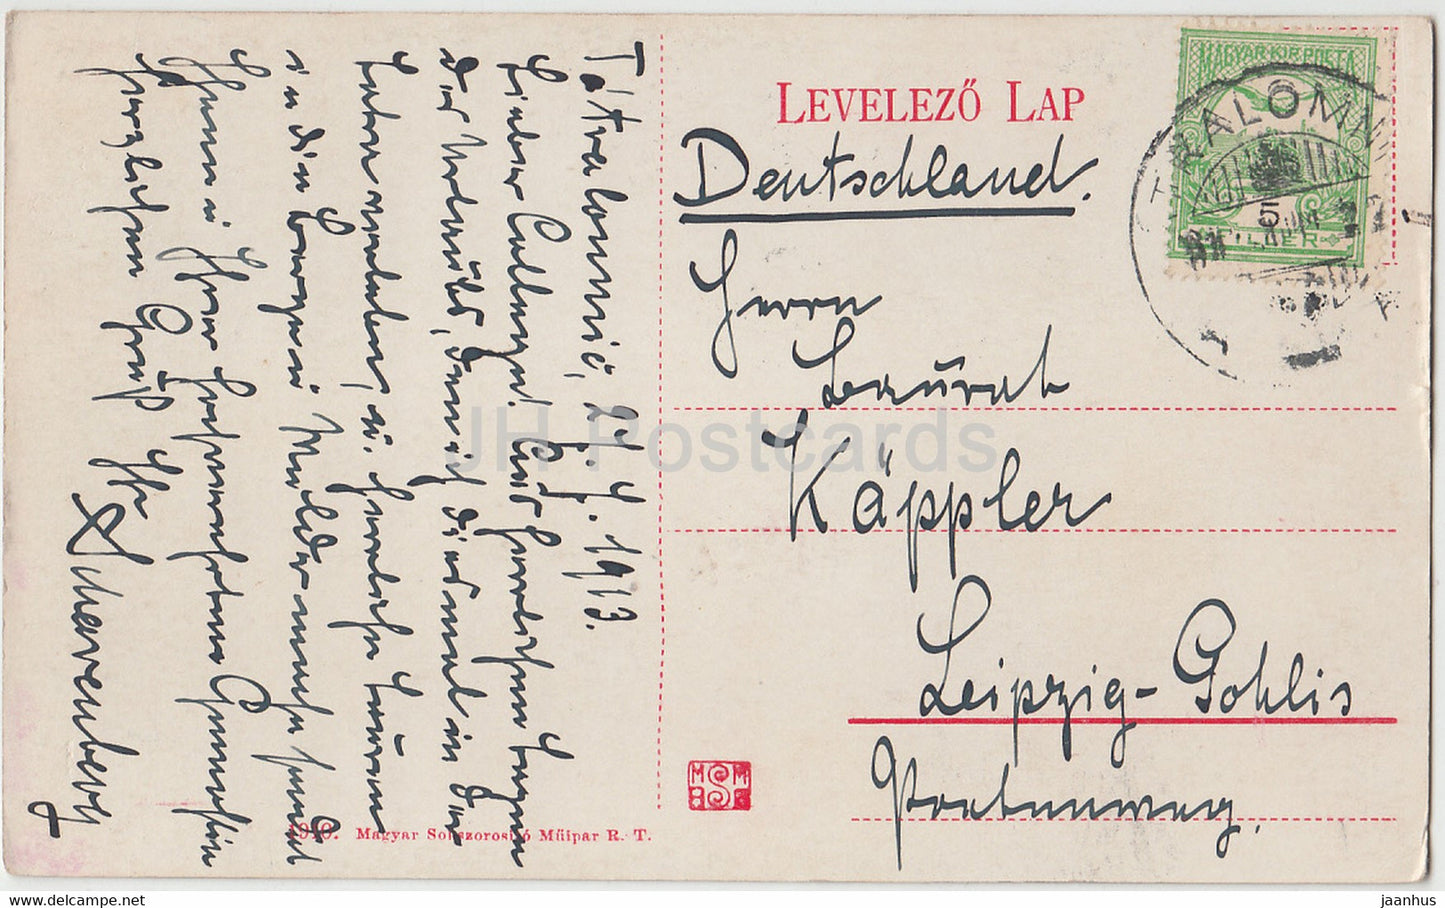 A Magas Tatra - Die Hohe Tatra - Ferencz Jozsef csucs - Franz Josepfspitse - carte postale ancienne - 1913 - Slovaquie - utilisé